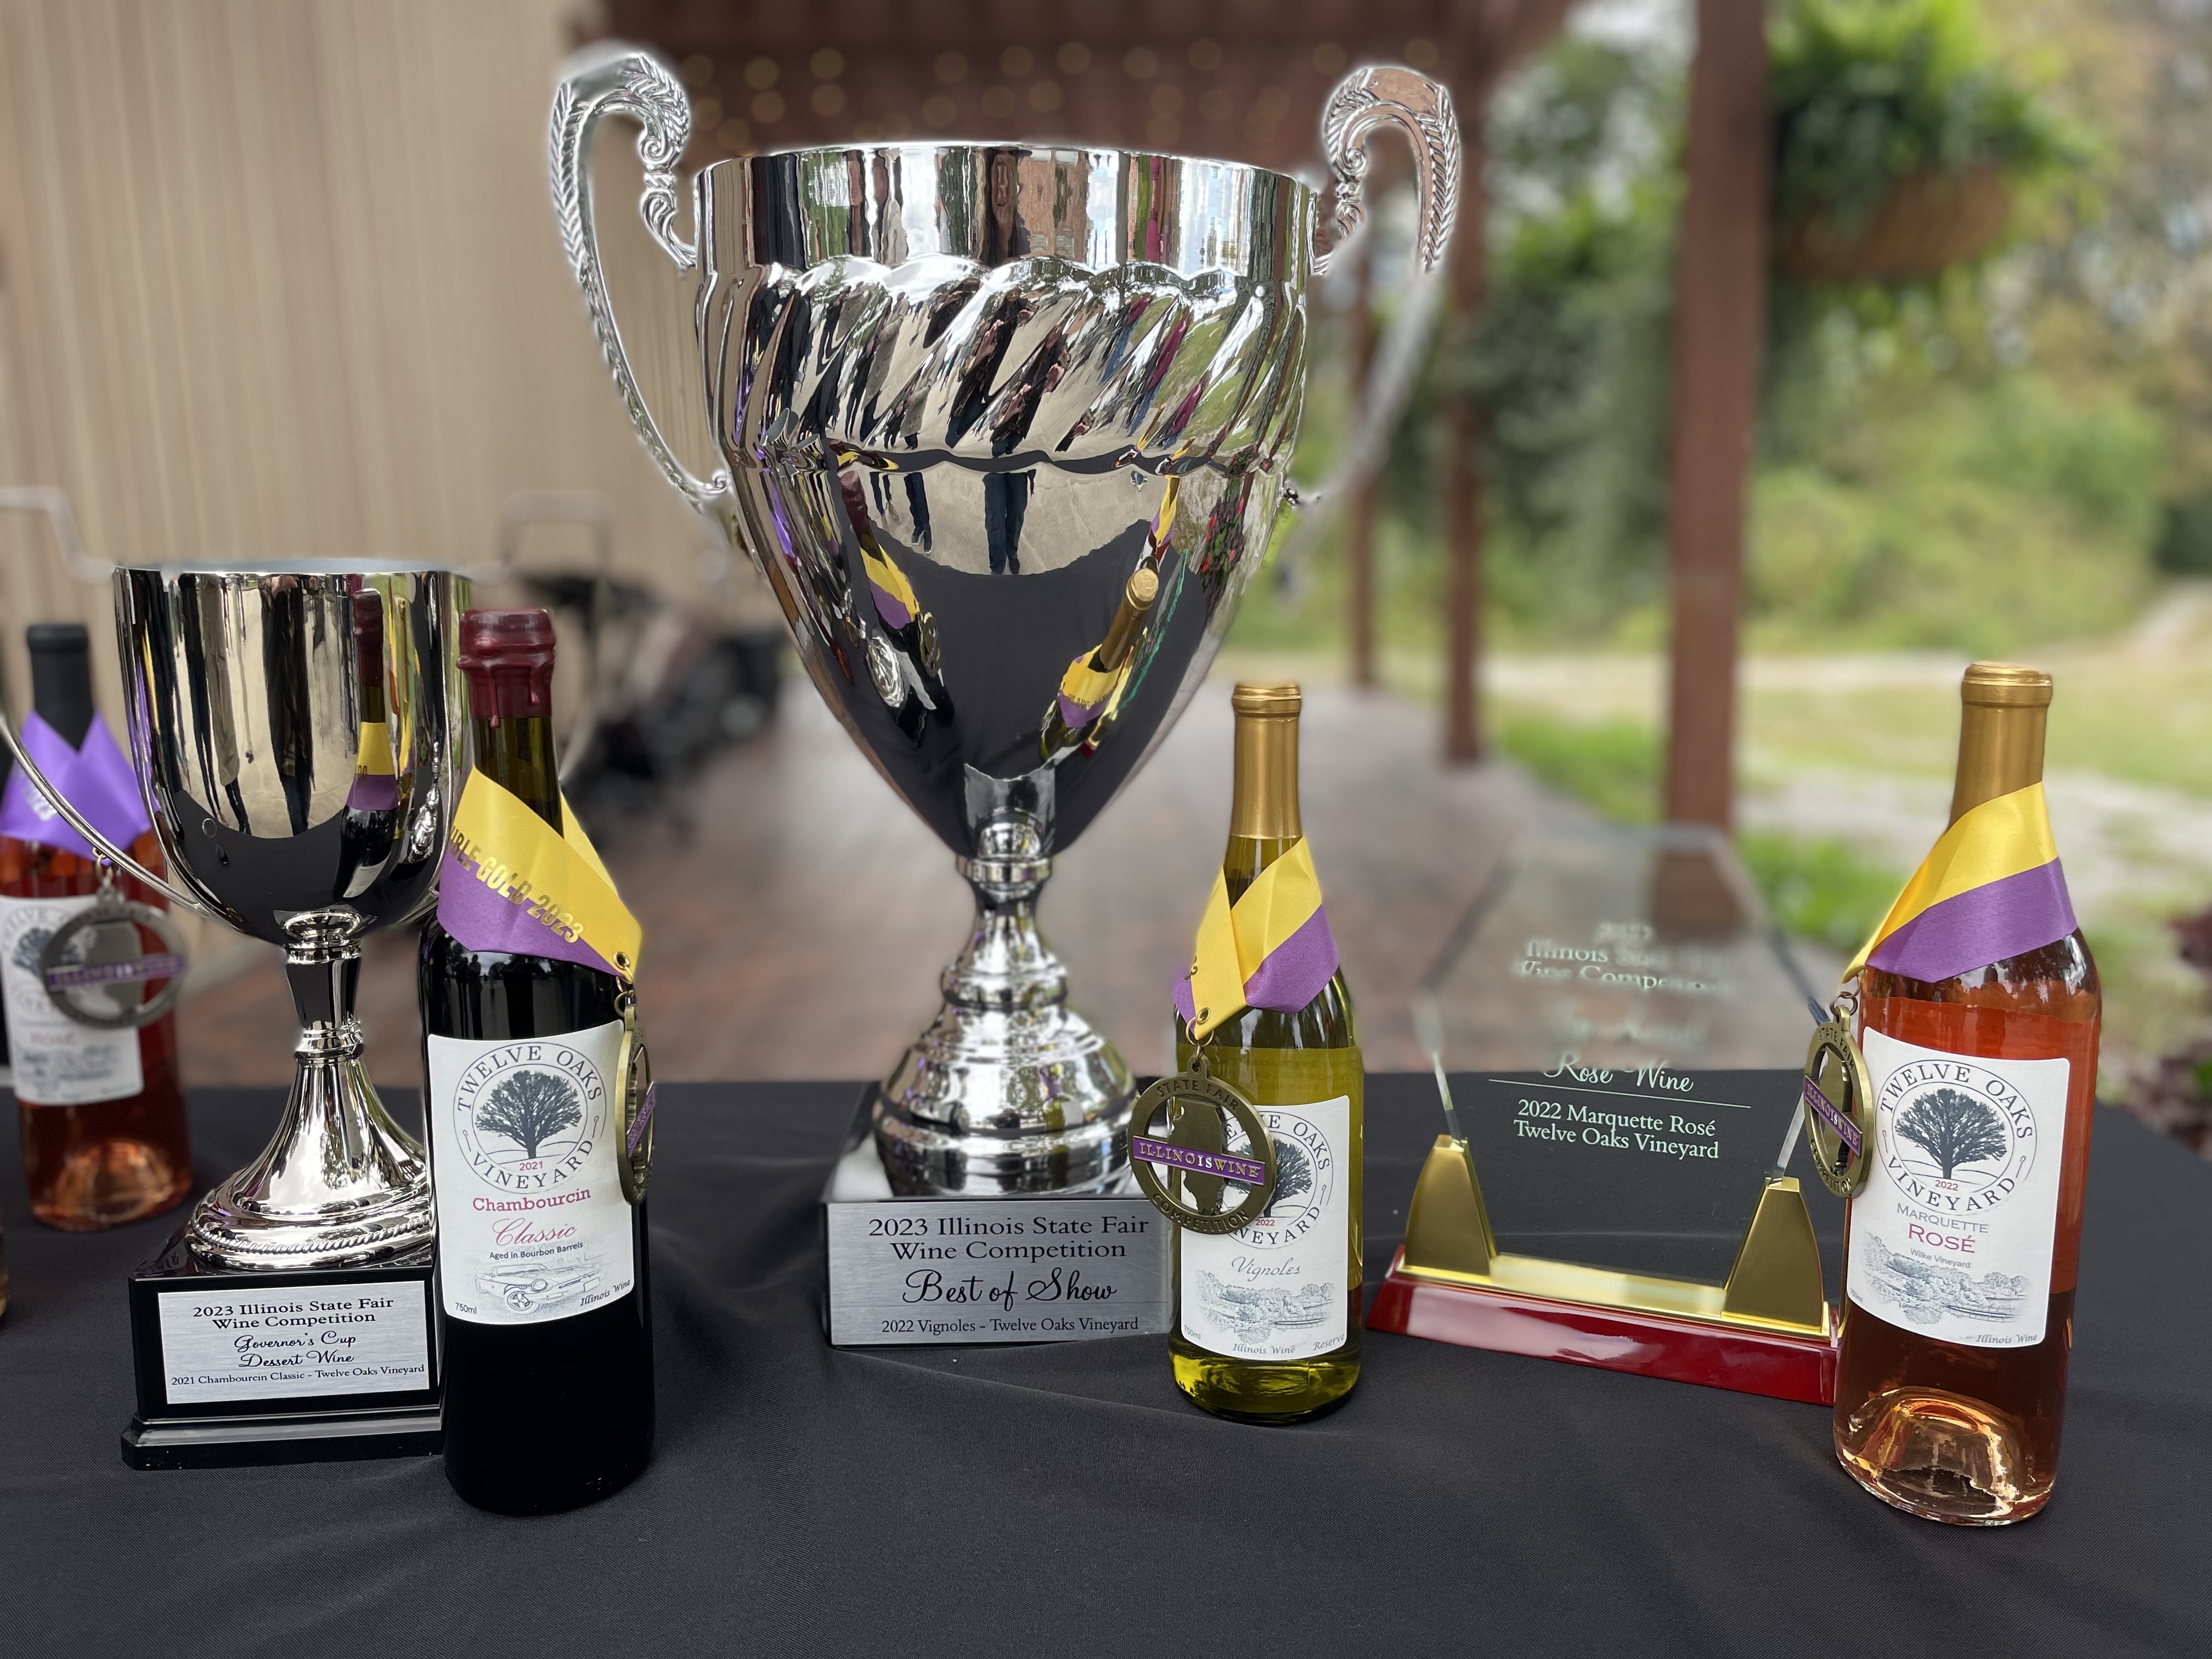 Twelve Oaks Vineyard Wins Annual Awards